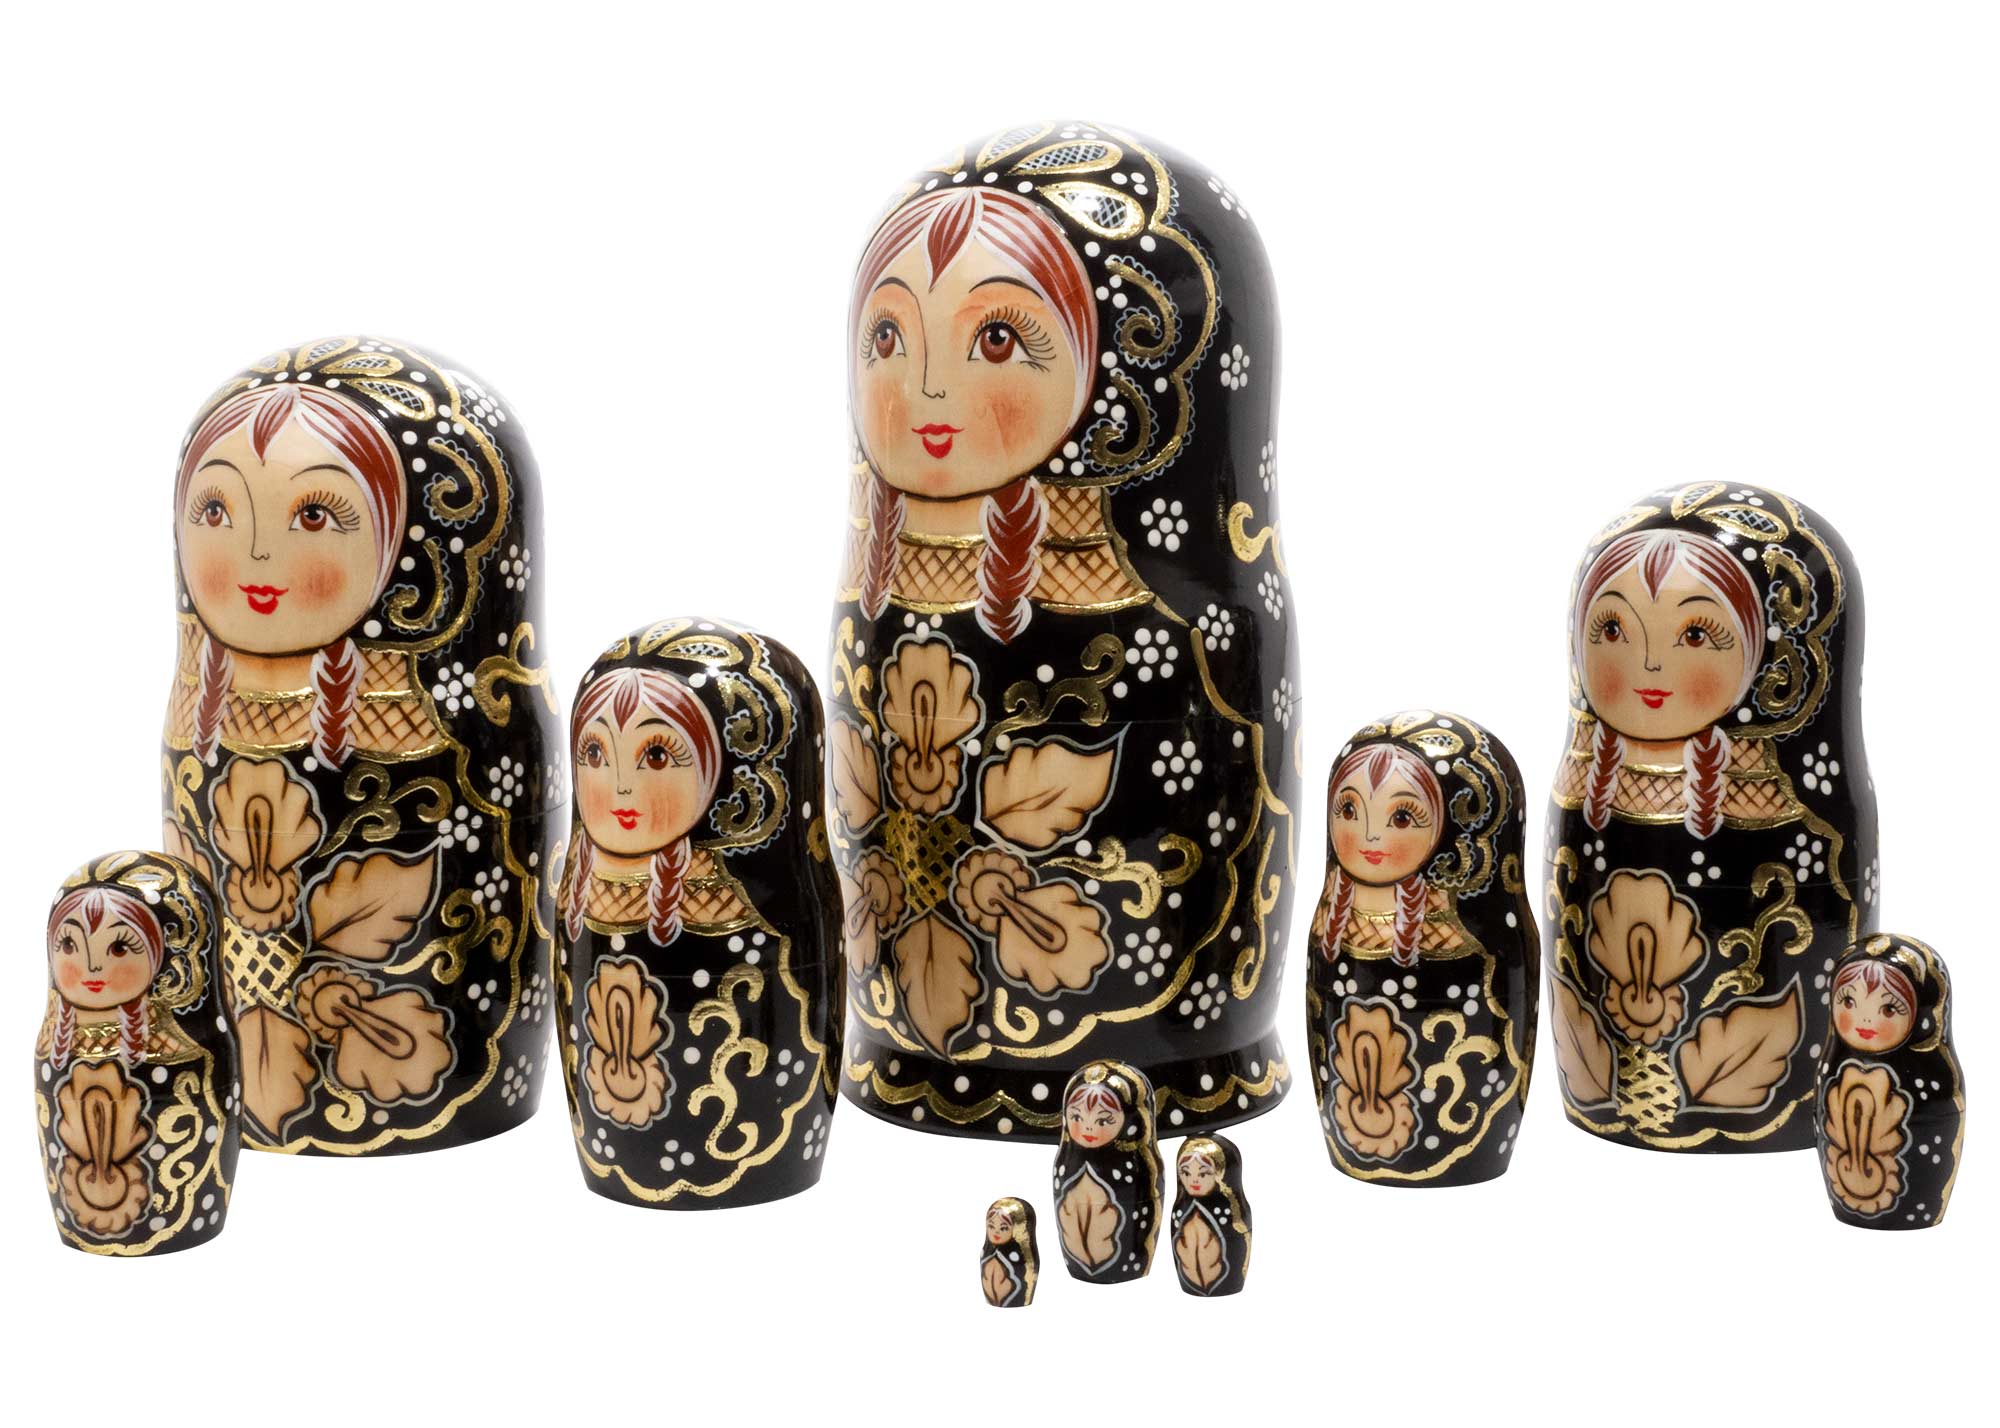 Buy Deluxe Woodburned Matryoshka Doll 10pc./10" at GoldenCockerel.com